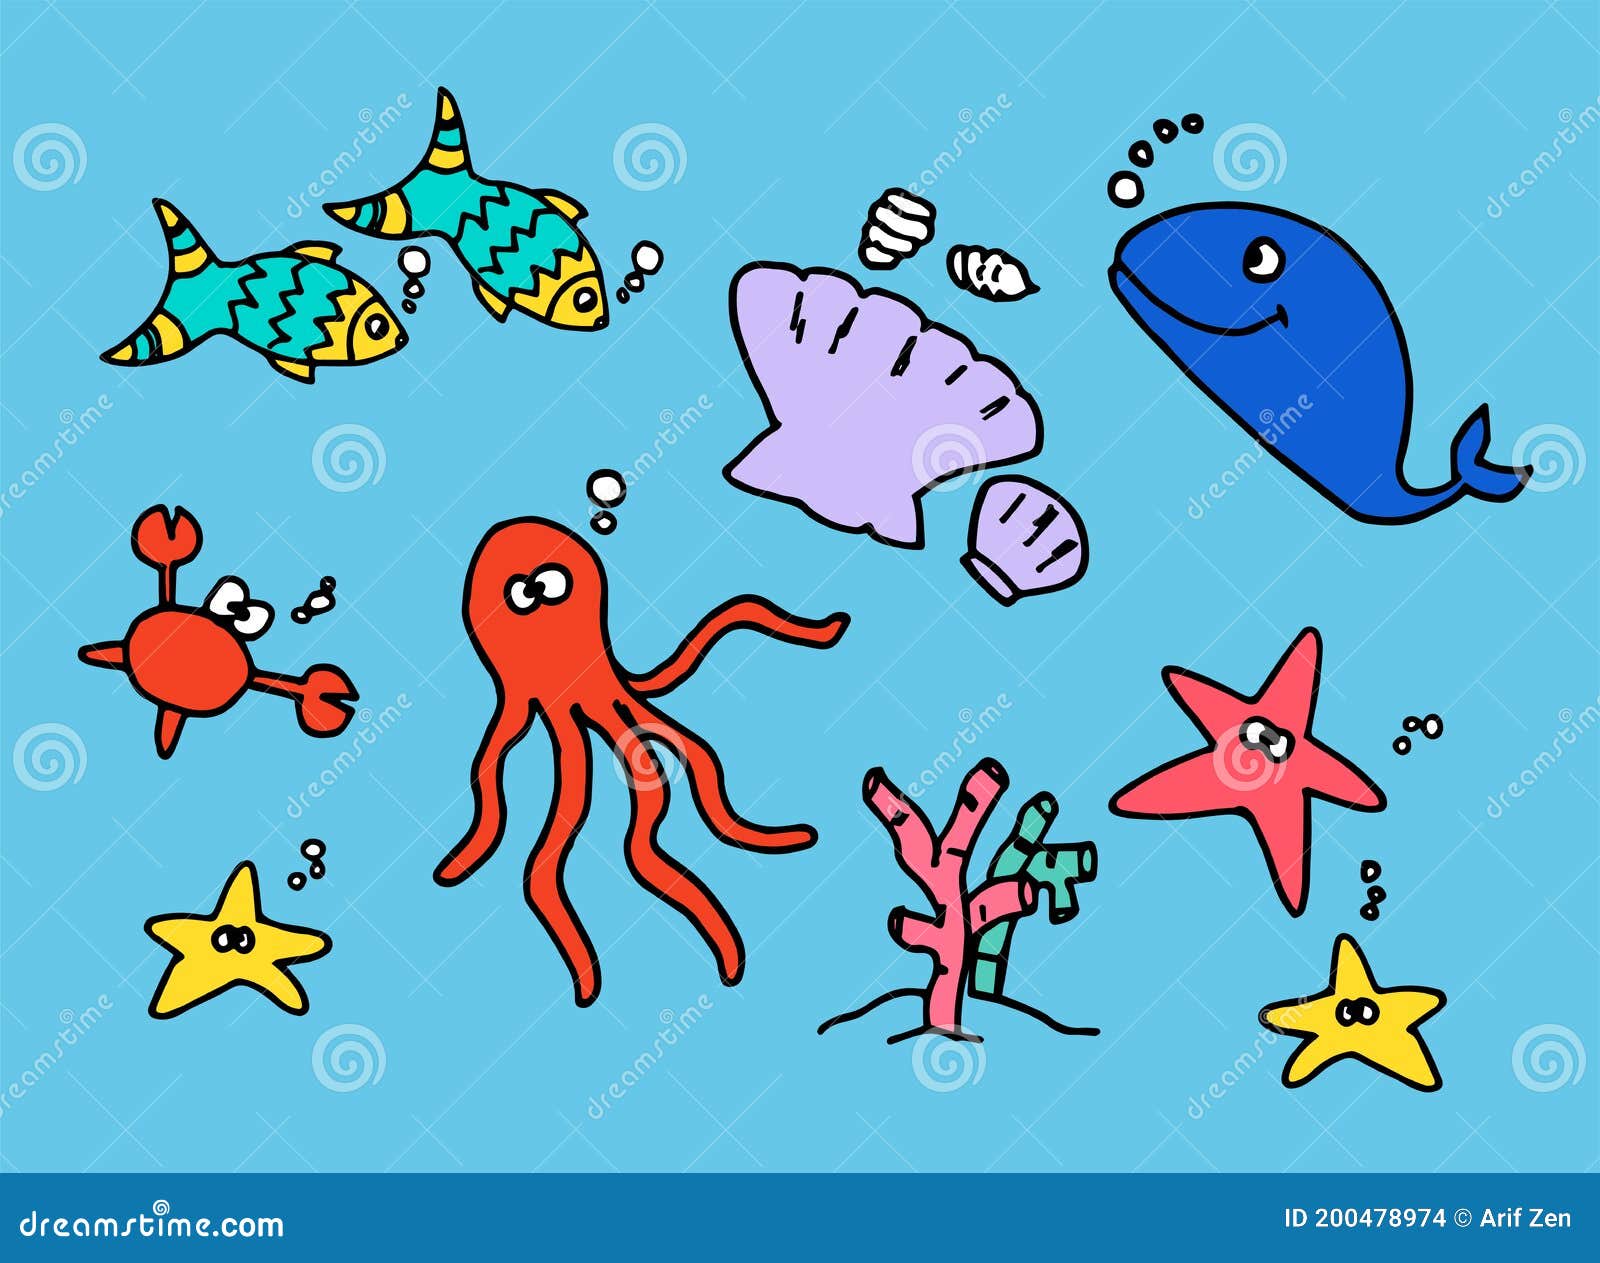 10000 Free Sea Animal  Jellyfish Images  Pixabay